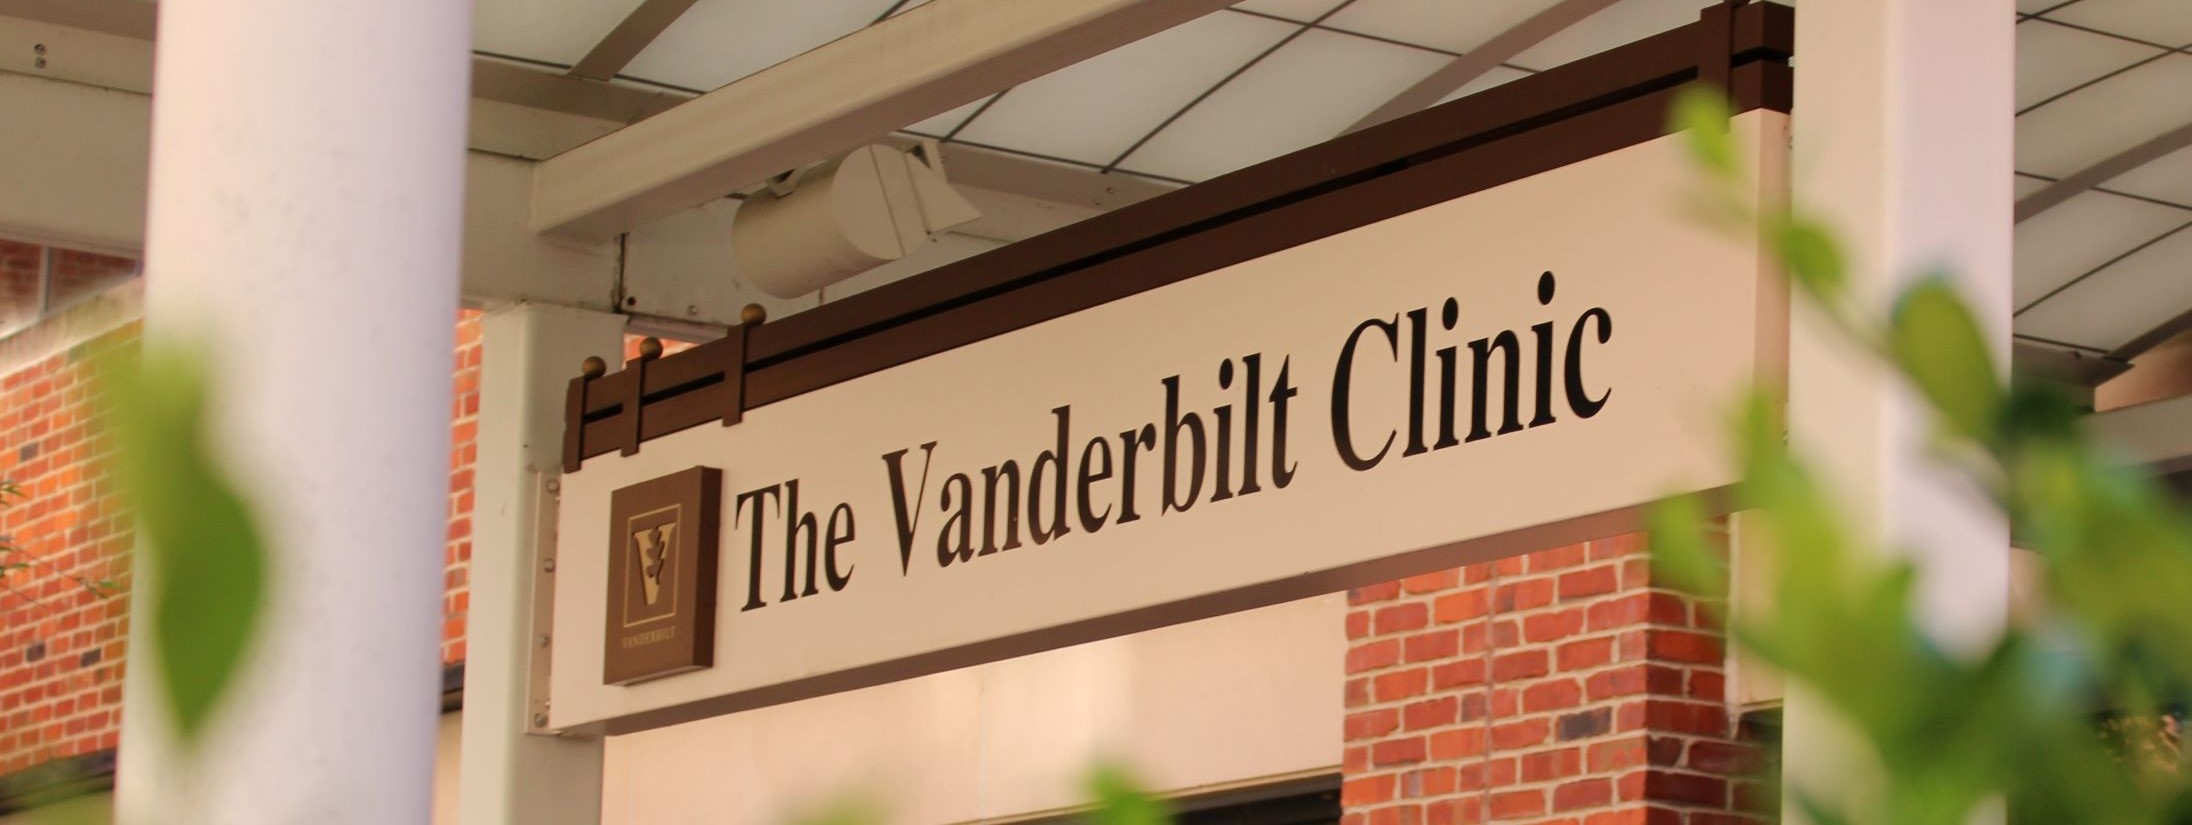 The Vanderbilt Clinic